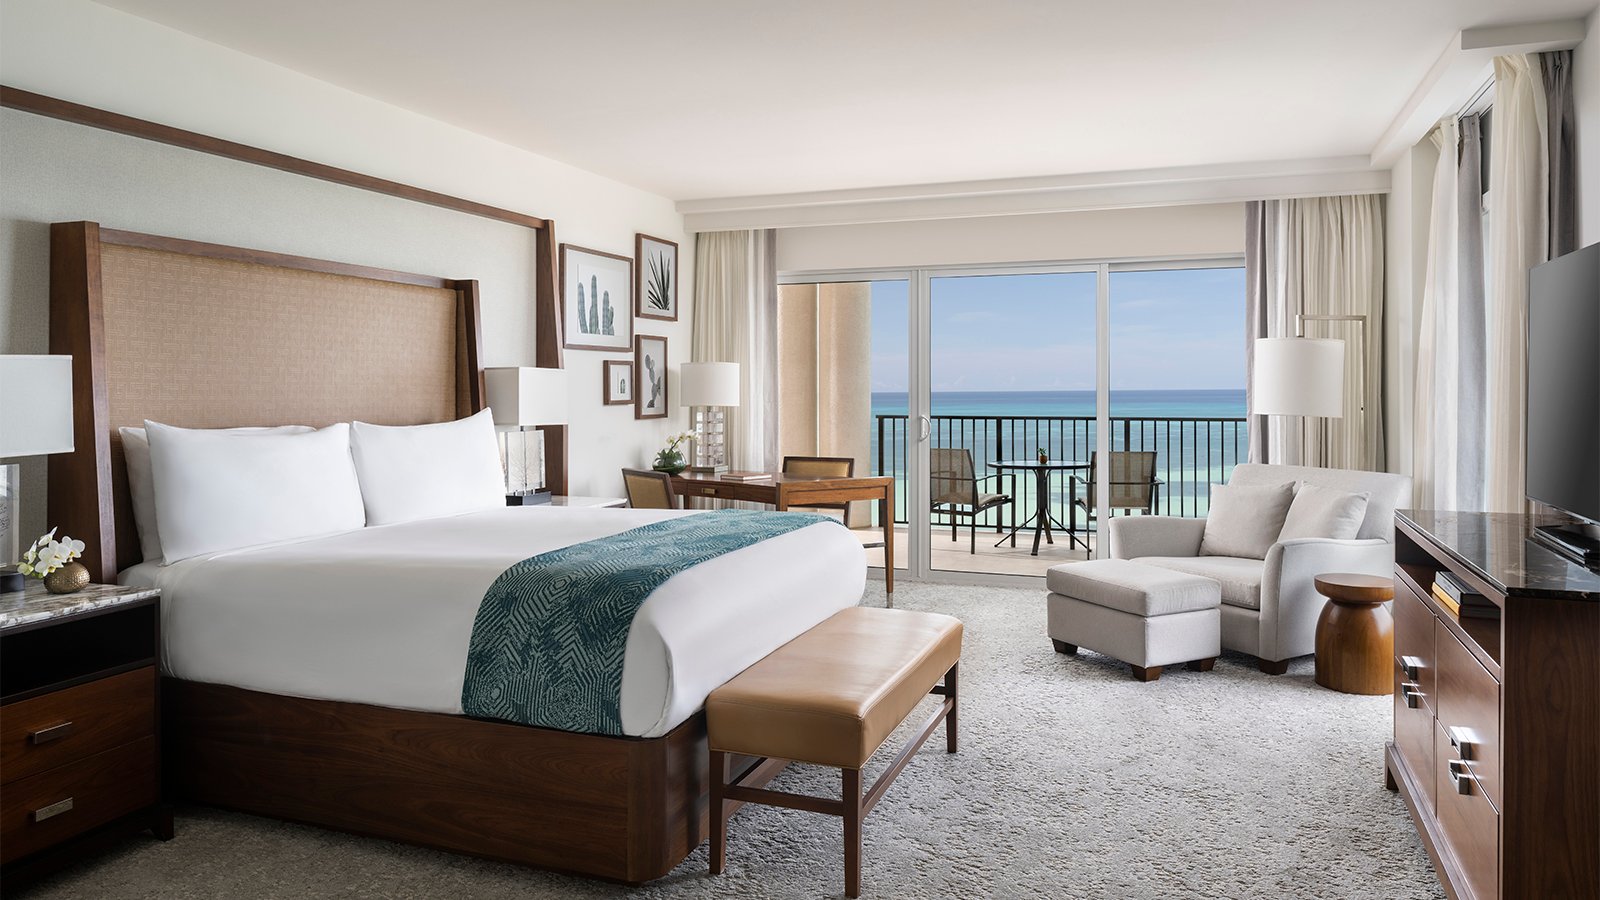 Refreshed bedroom The Ritz-Carlton Aruba